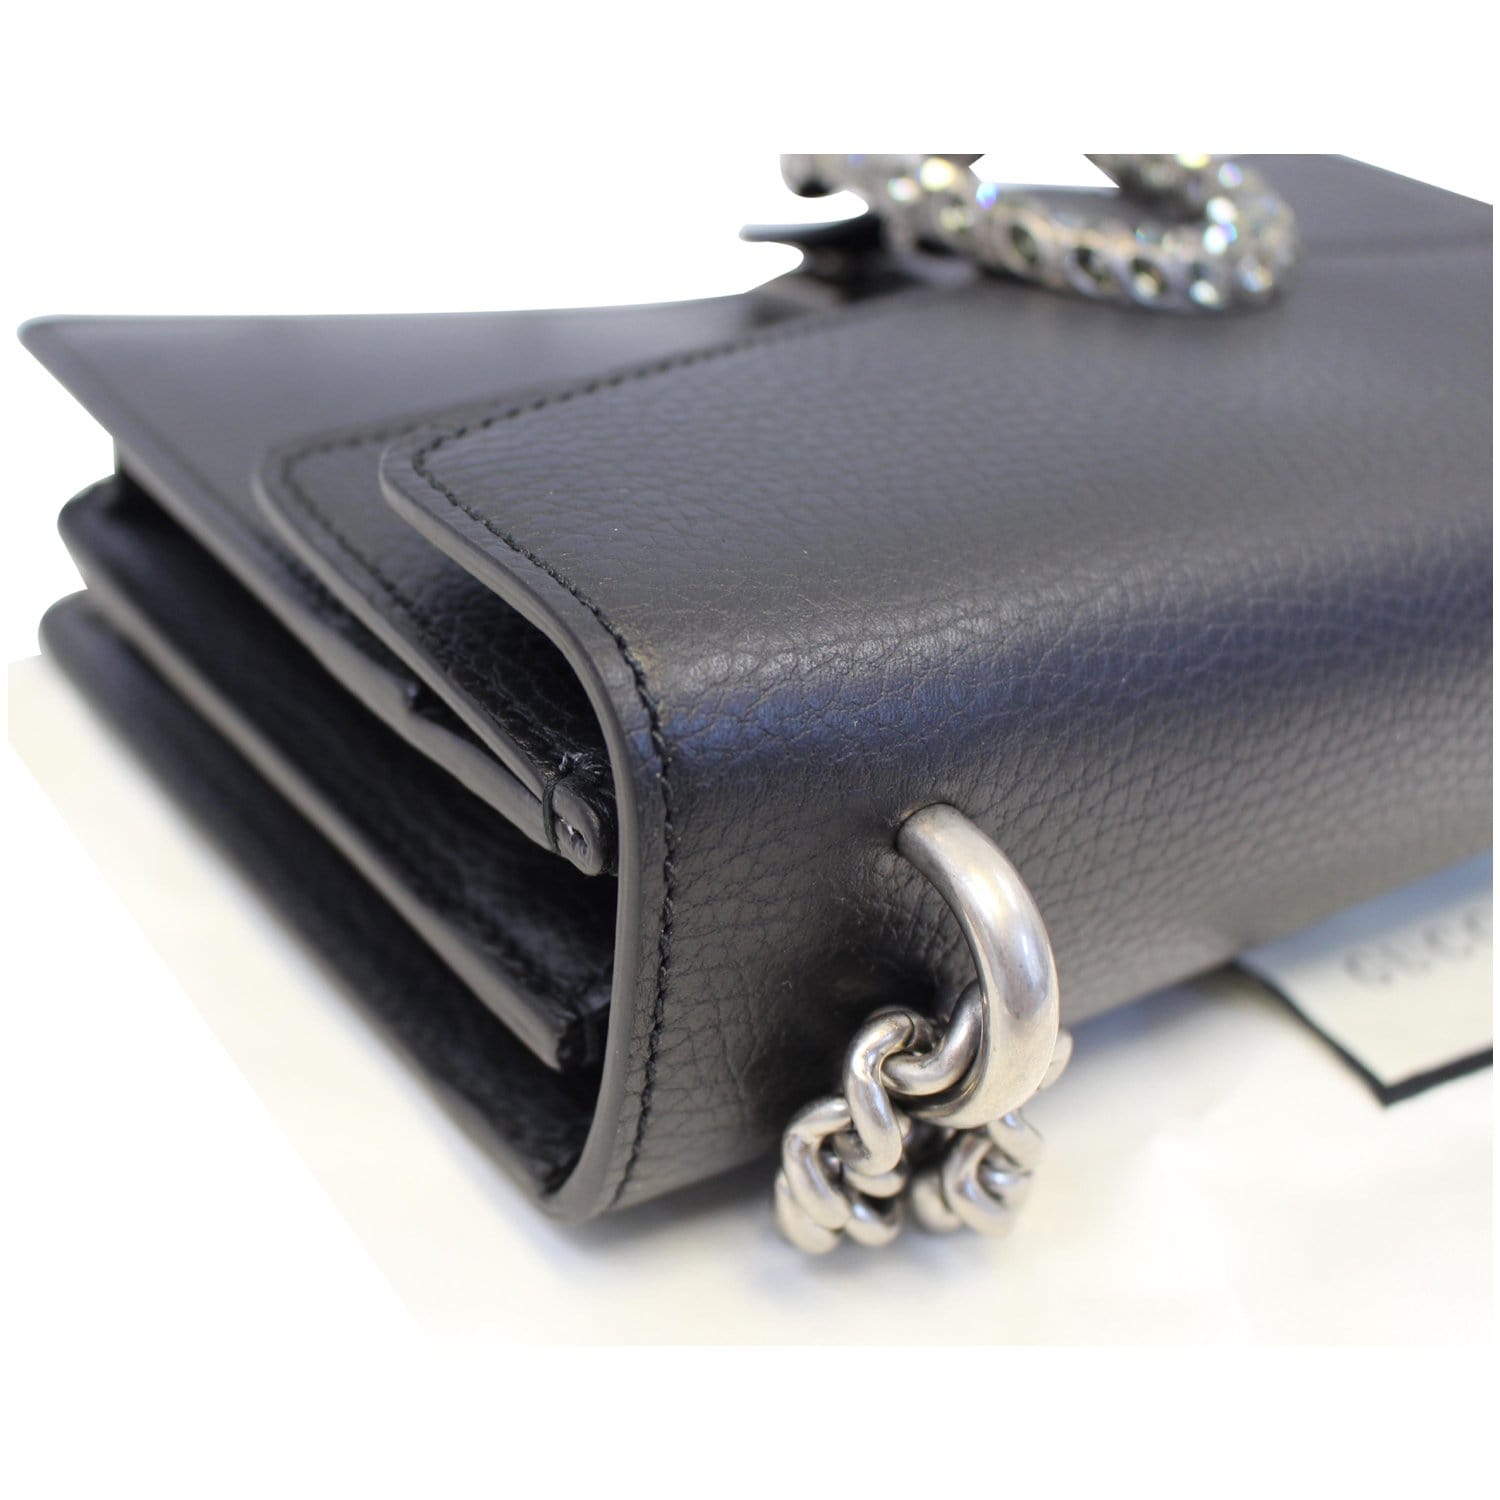 Gucci Shoulder Bag Dionysus Small Leather Black